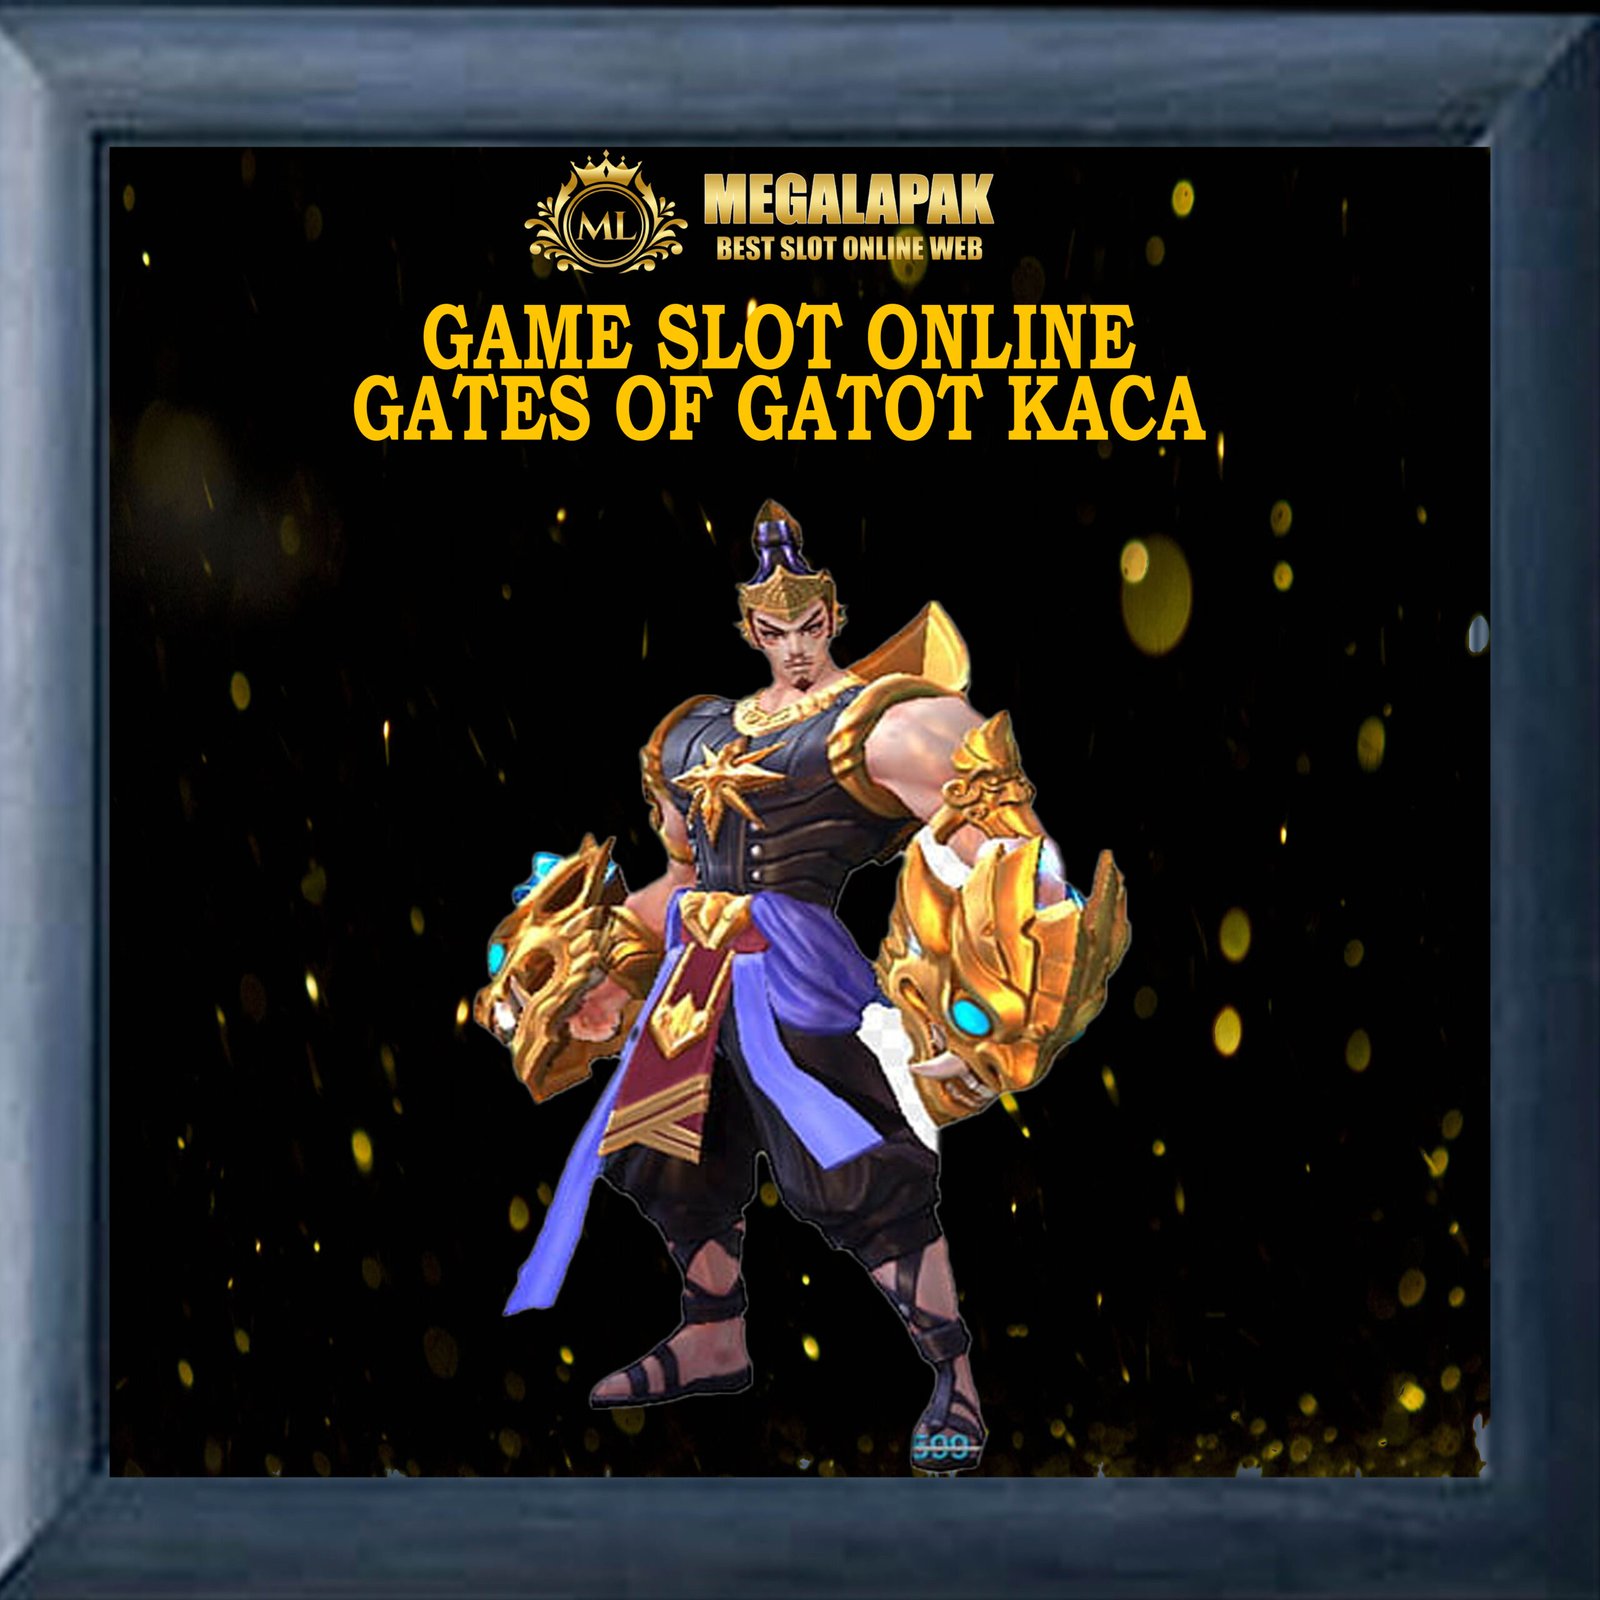 Slot Online Gates Of Gatotkaca Megalapak